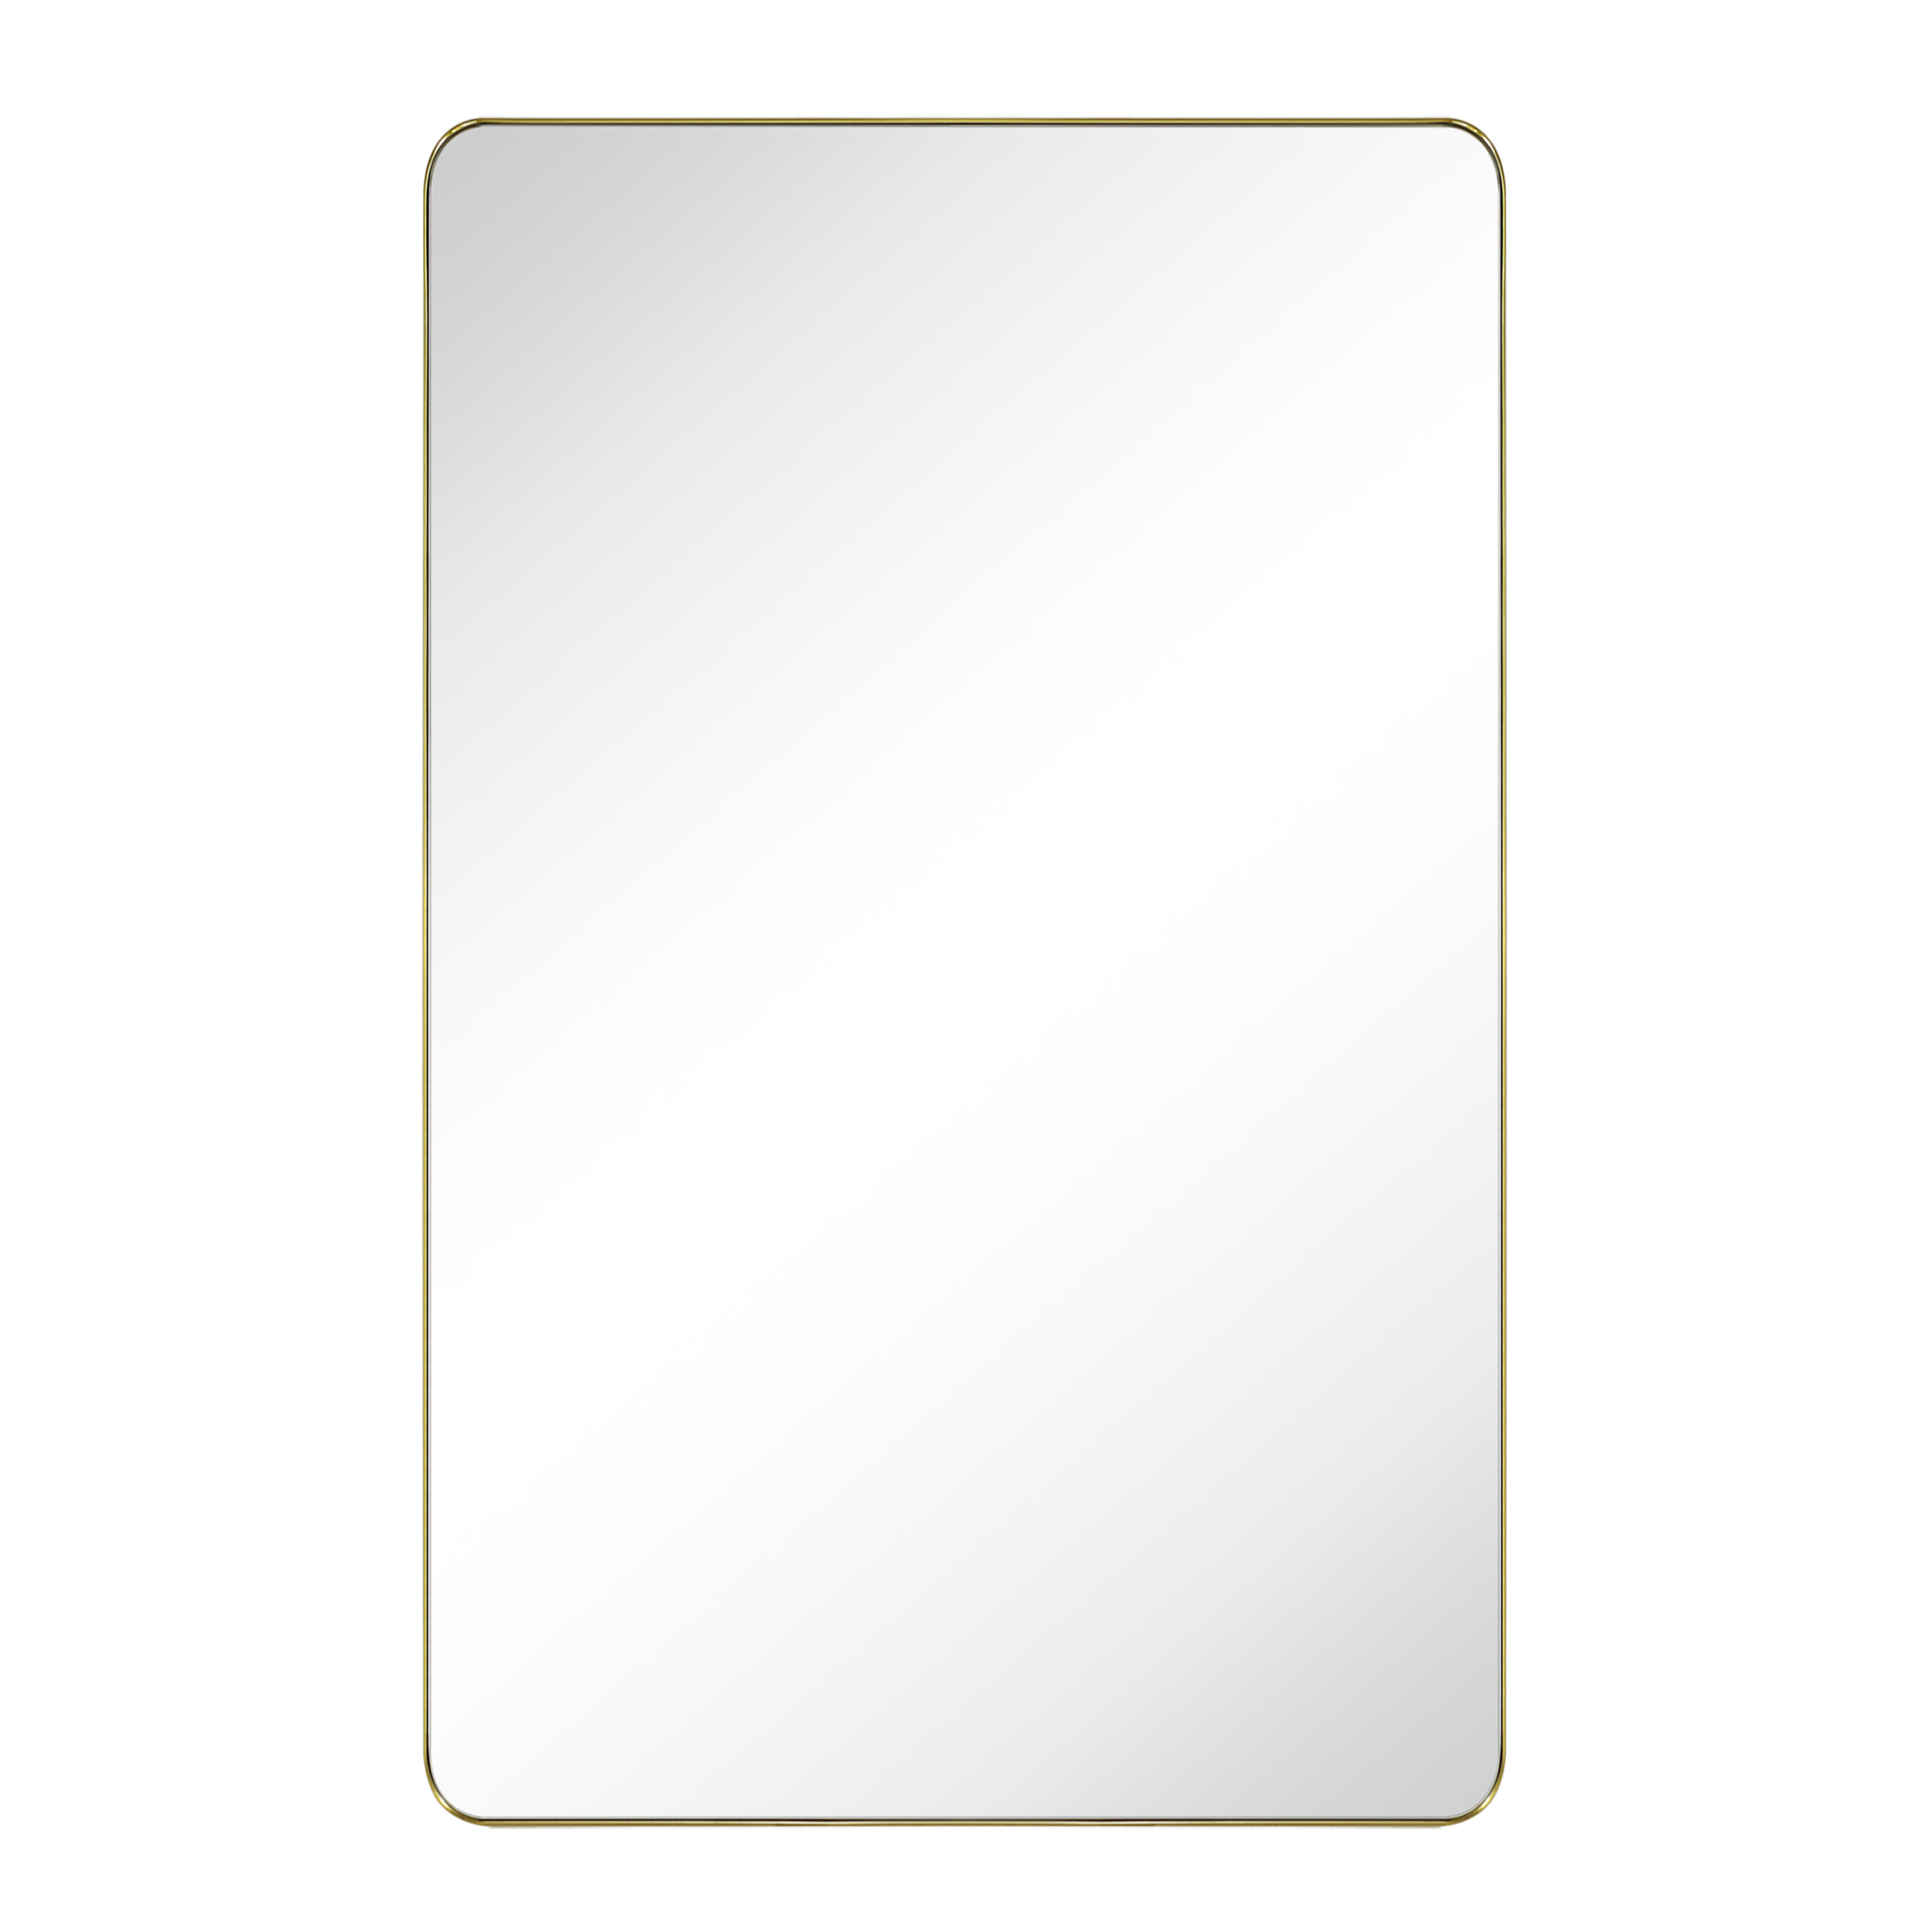 Kengston Modern & Contemporary Rectangular Bathroom Vanity Mirrors-30x48-Brushed Gold